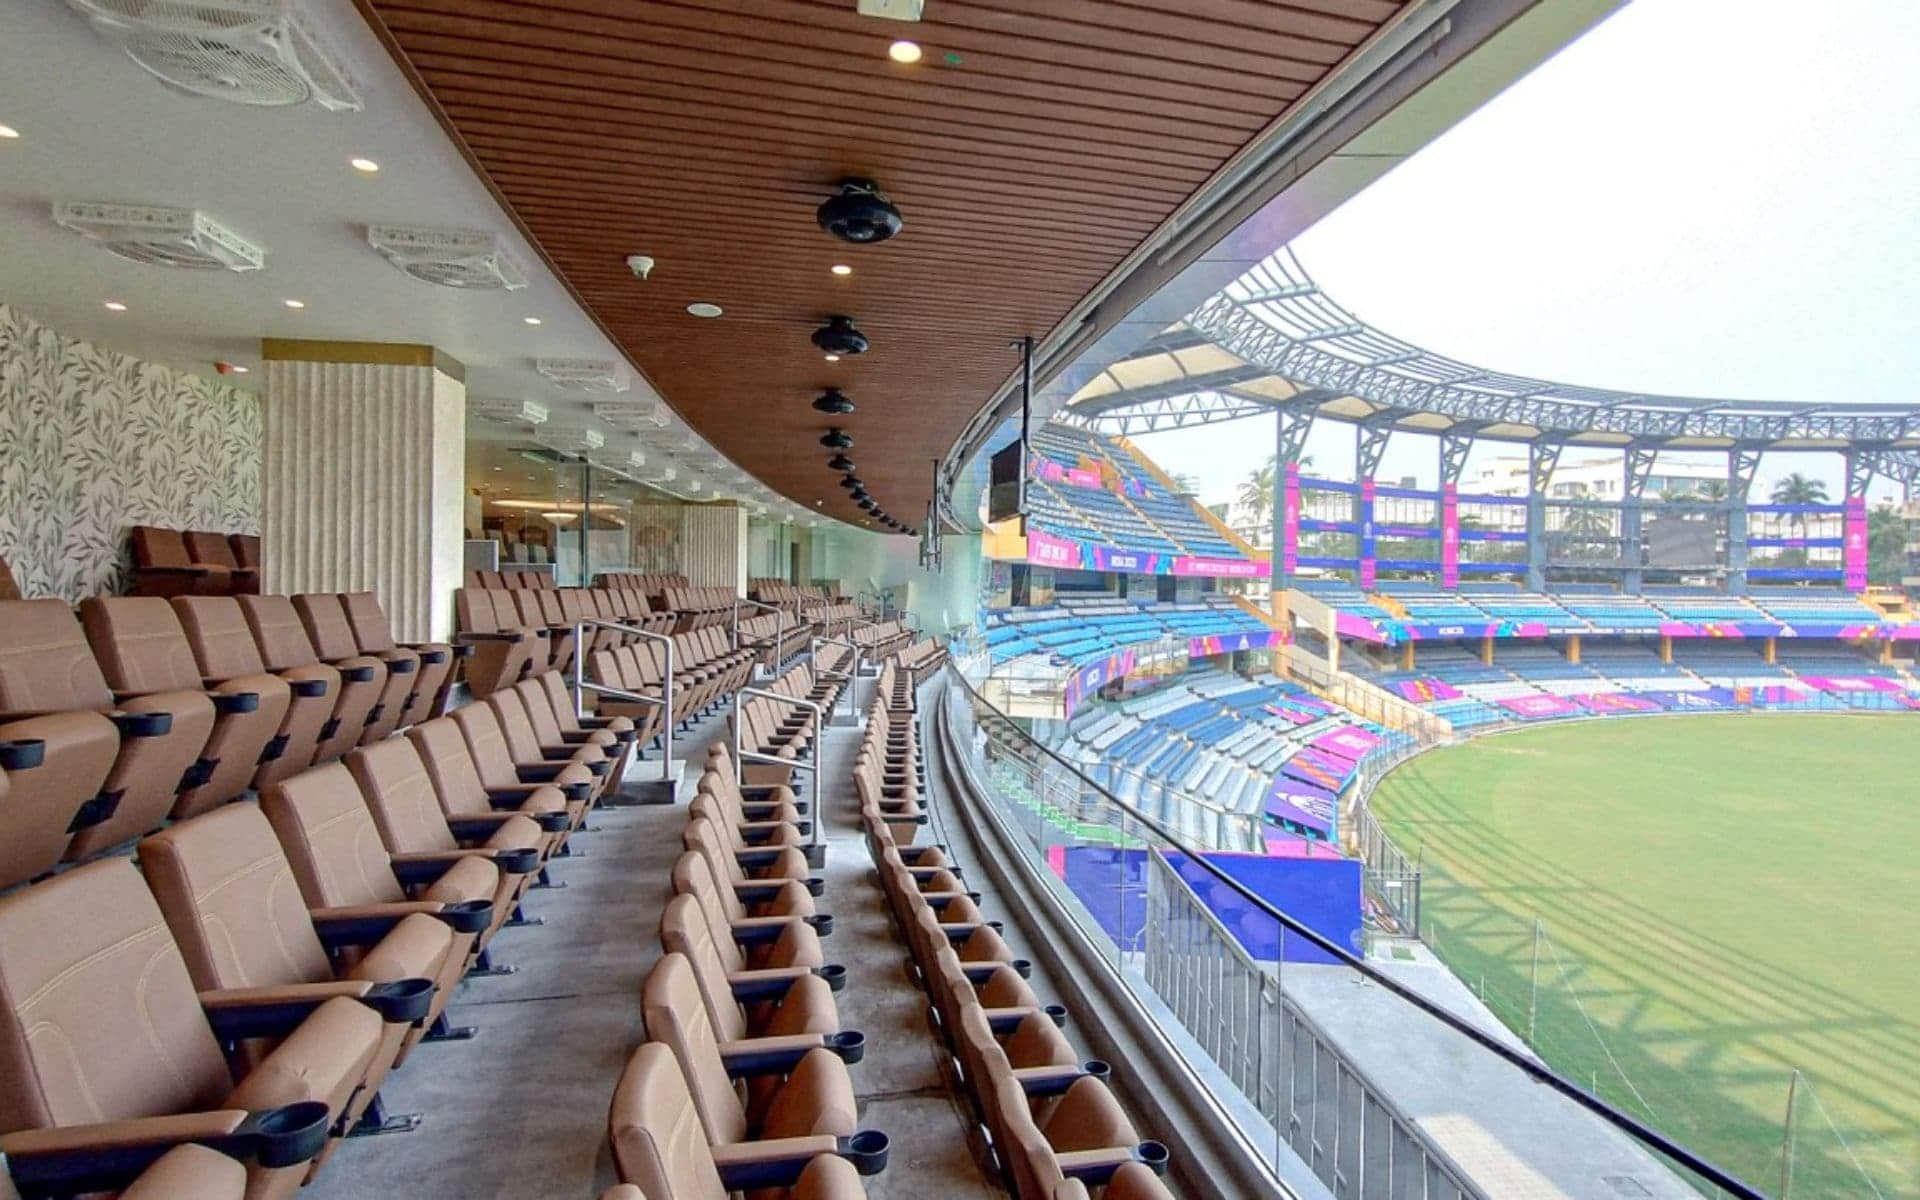 Wankhede stadium has a capacity of 33000 spectators. (LinkedIn)